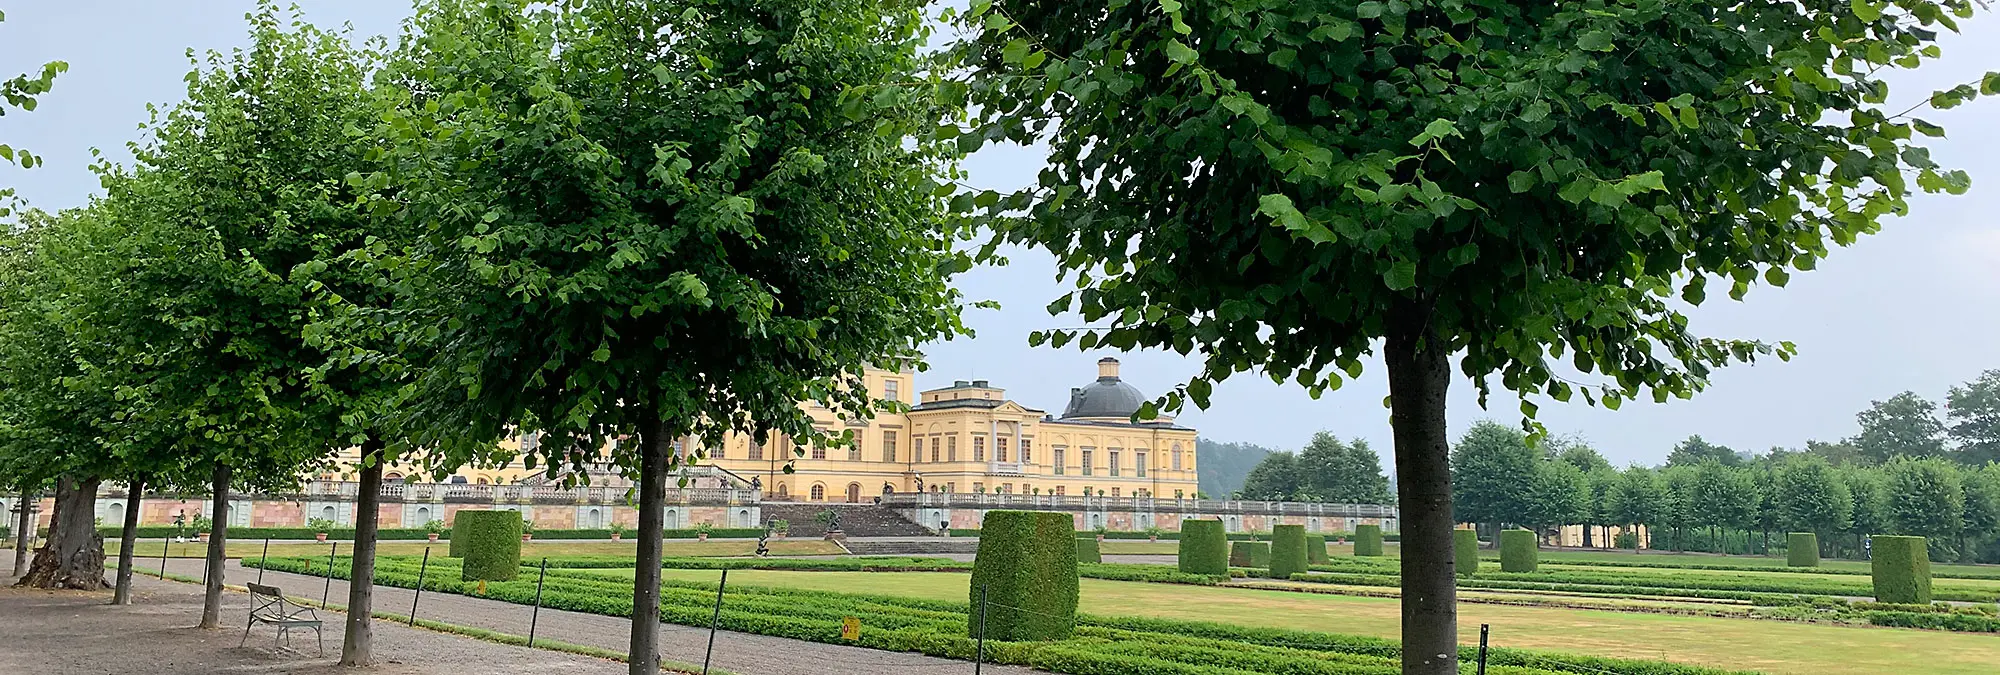 Blick auf Kaiser-Linden Allee Schloss Drottningholm in Schweden.